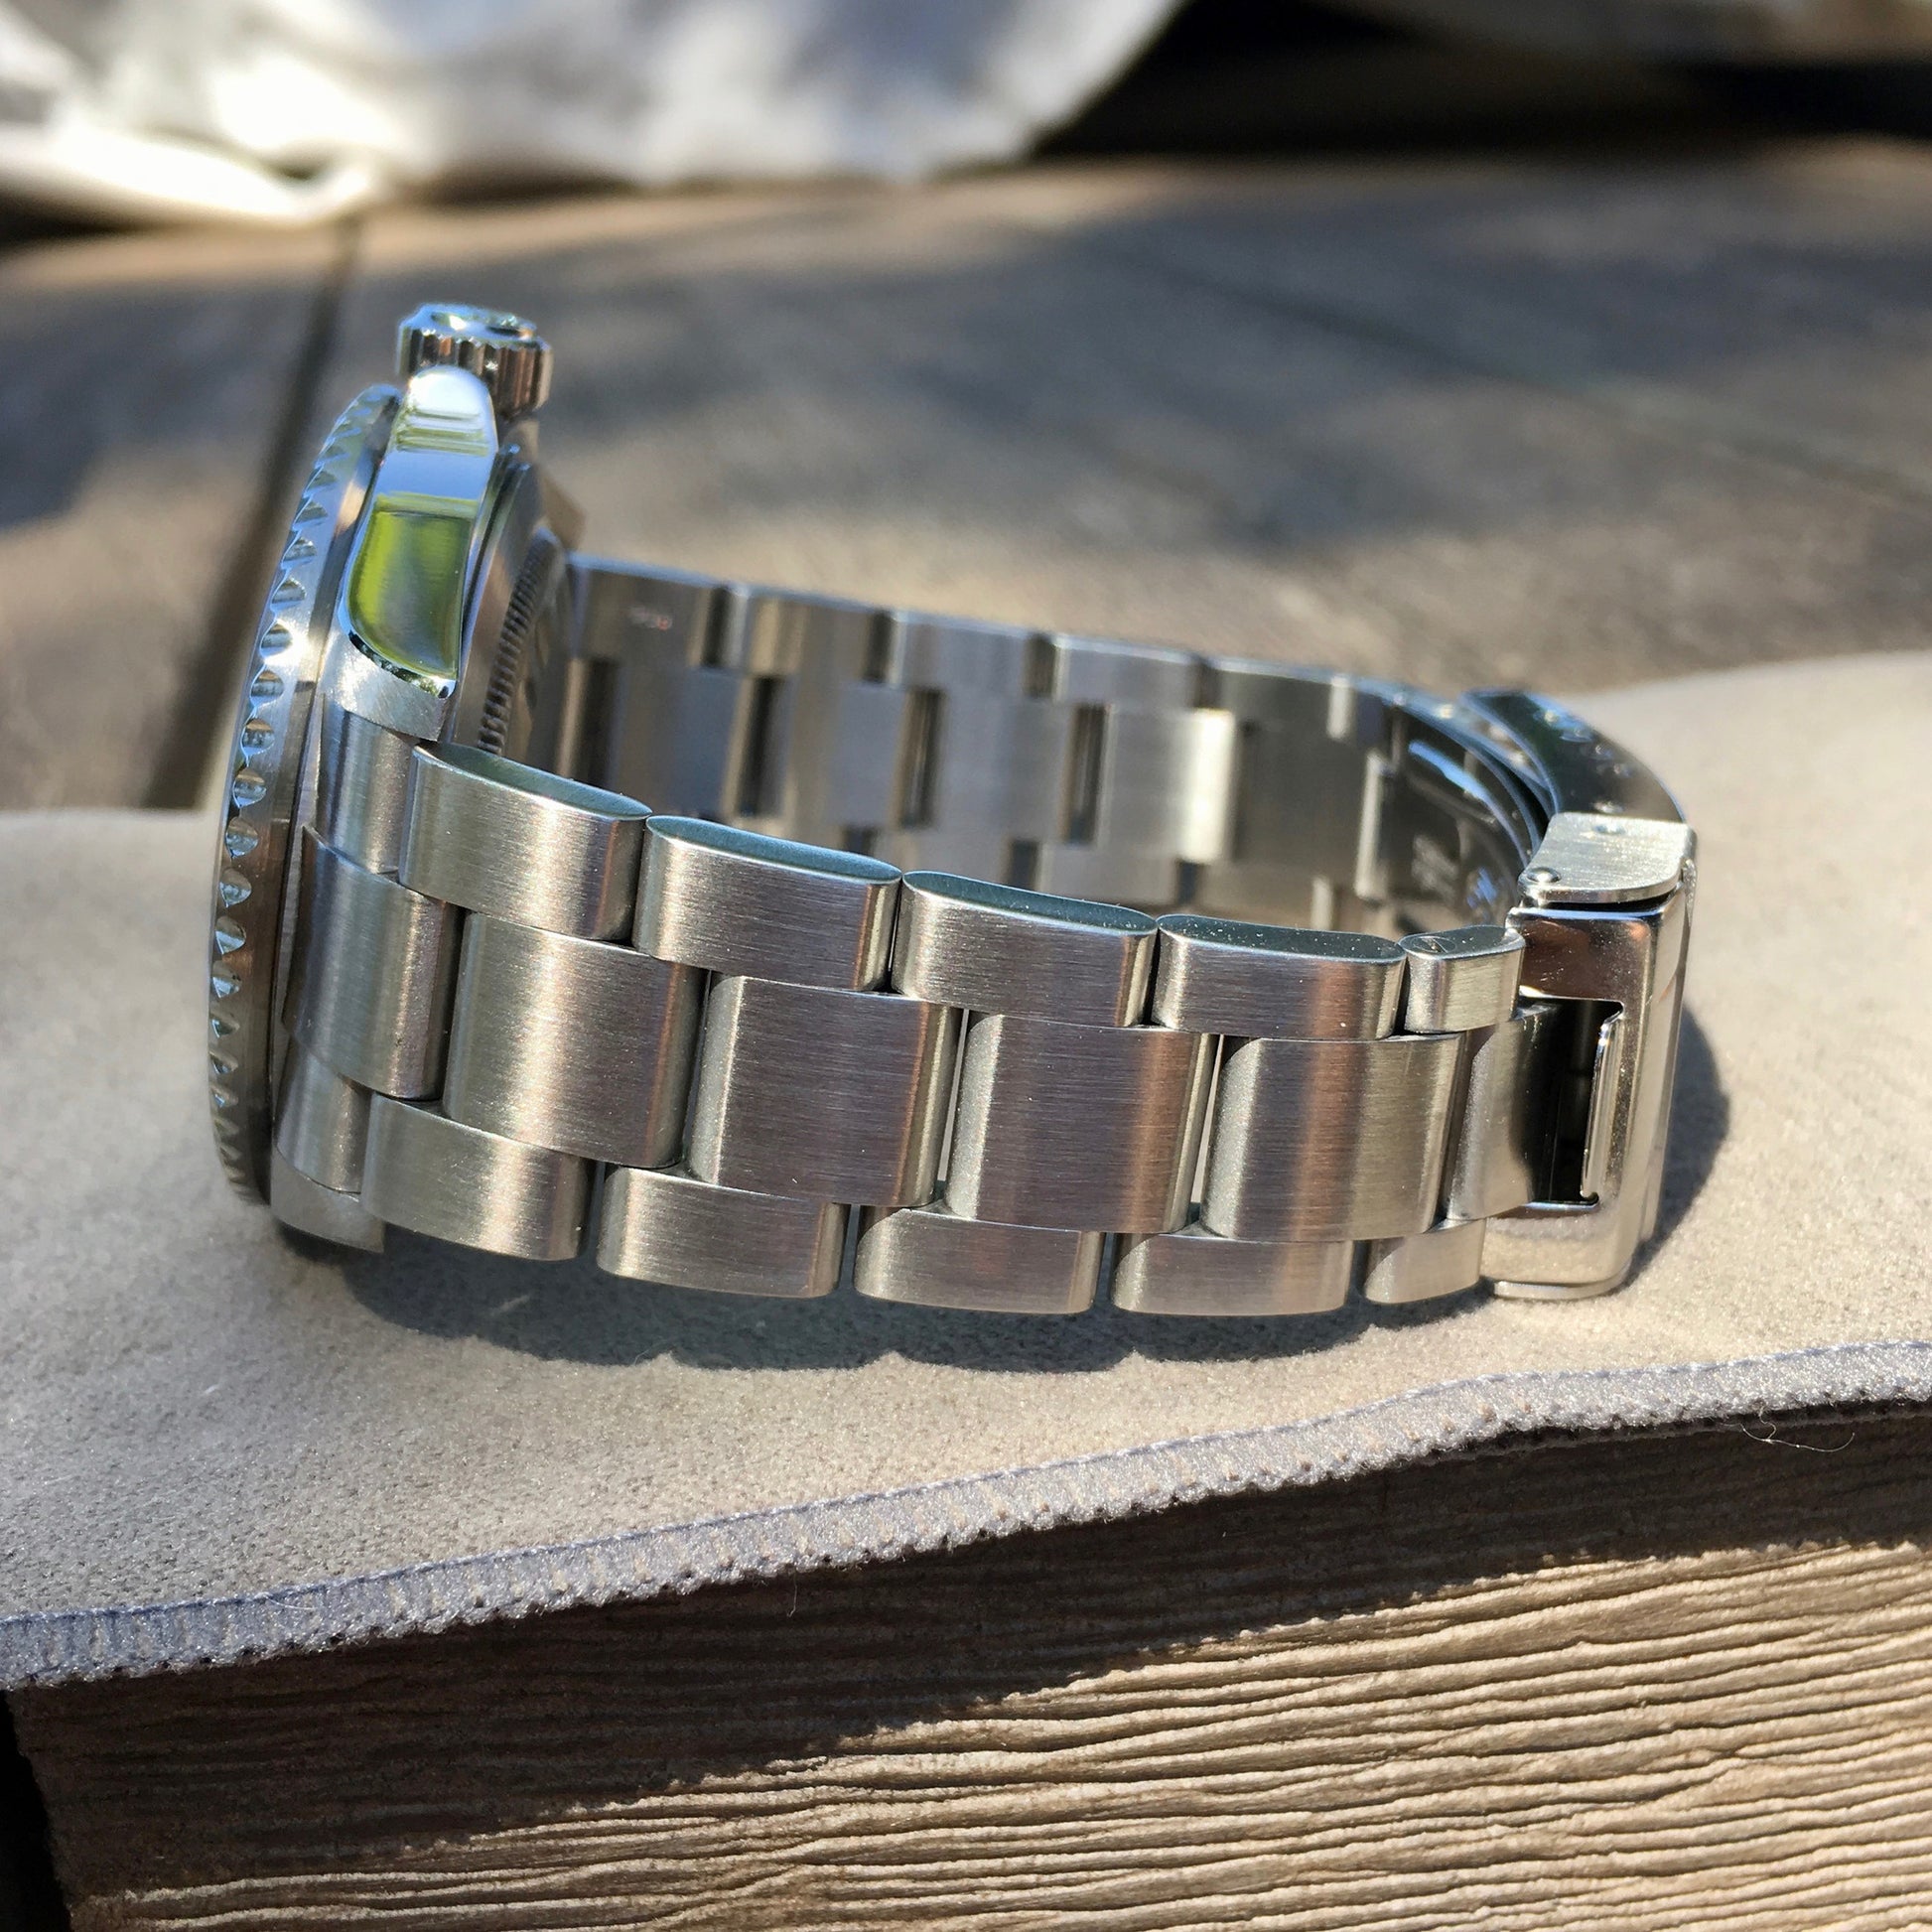 Buy Used Rolex Submariner 16610 | Bob's Watches - Sku: 149182